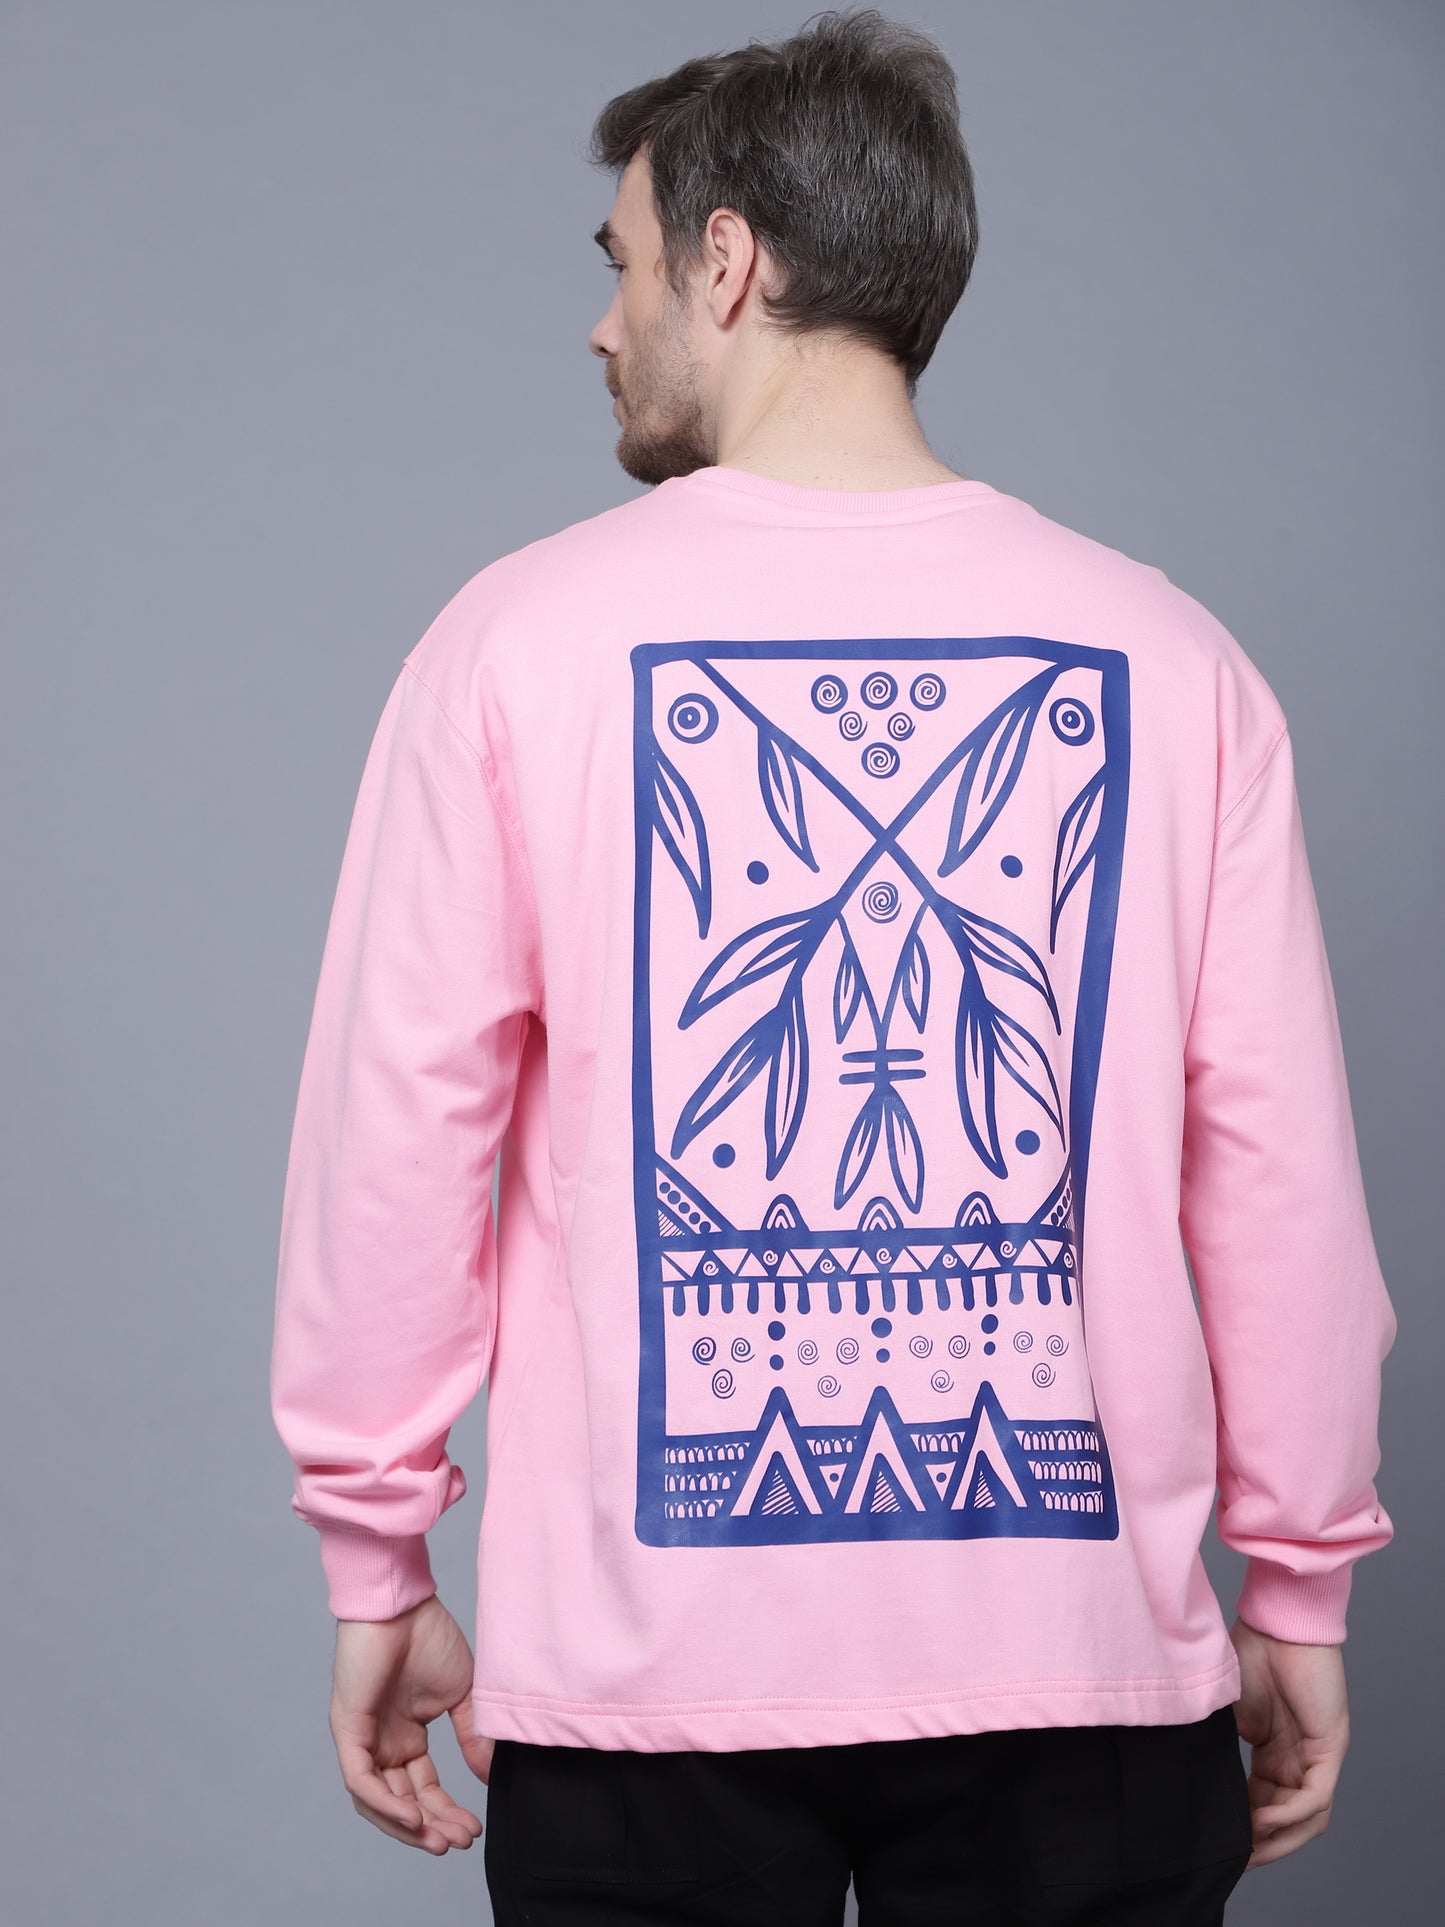 Indigo Tribal Over- Sized Sweat-Shirt (Pink) - Wearduds